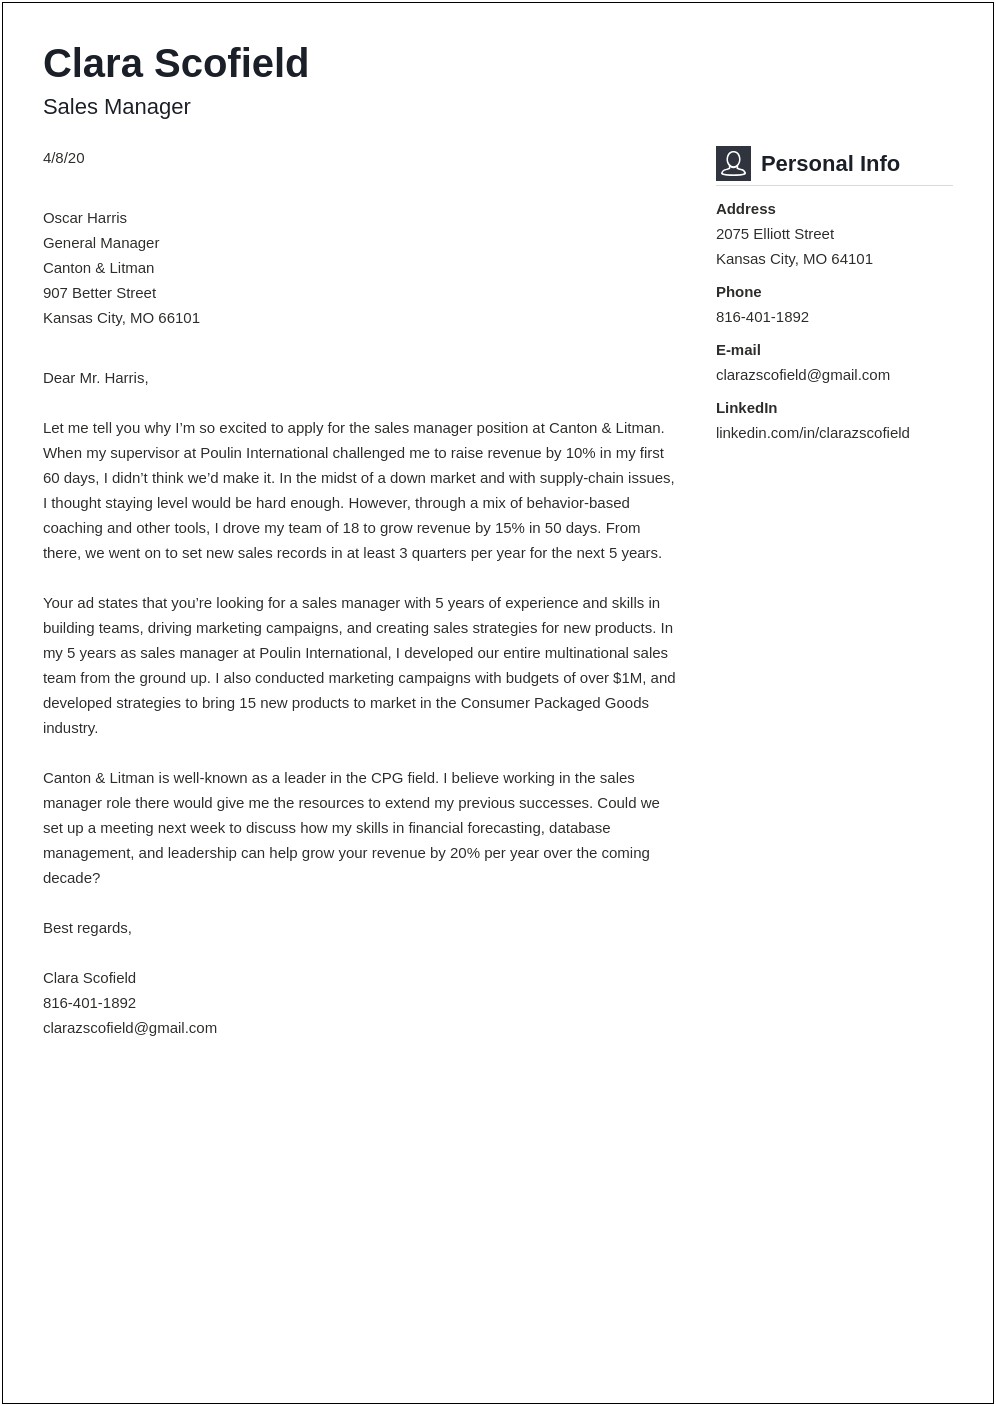 Sample Cover Letter For Sales Manager Resume